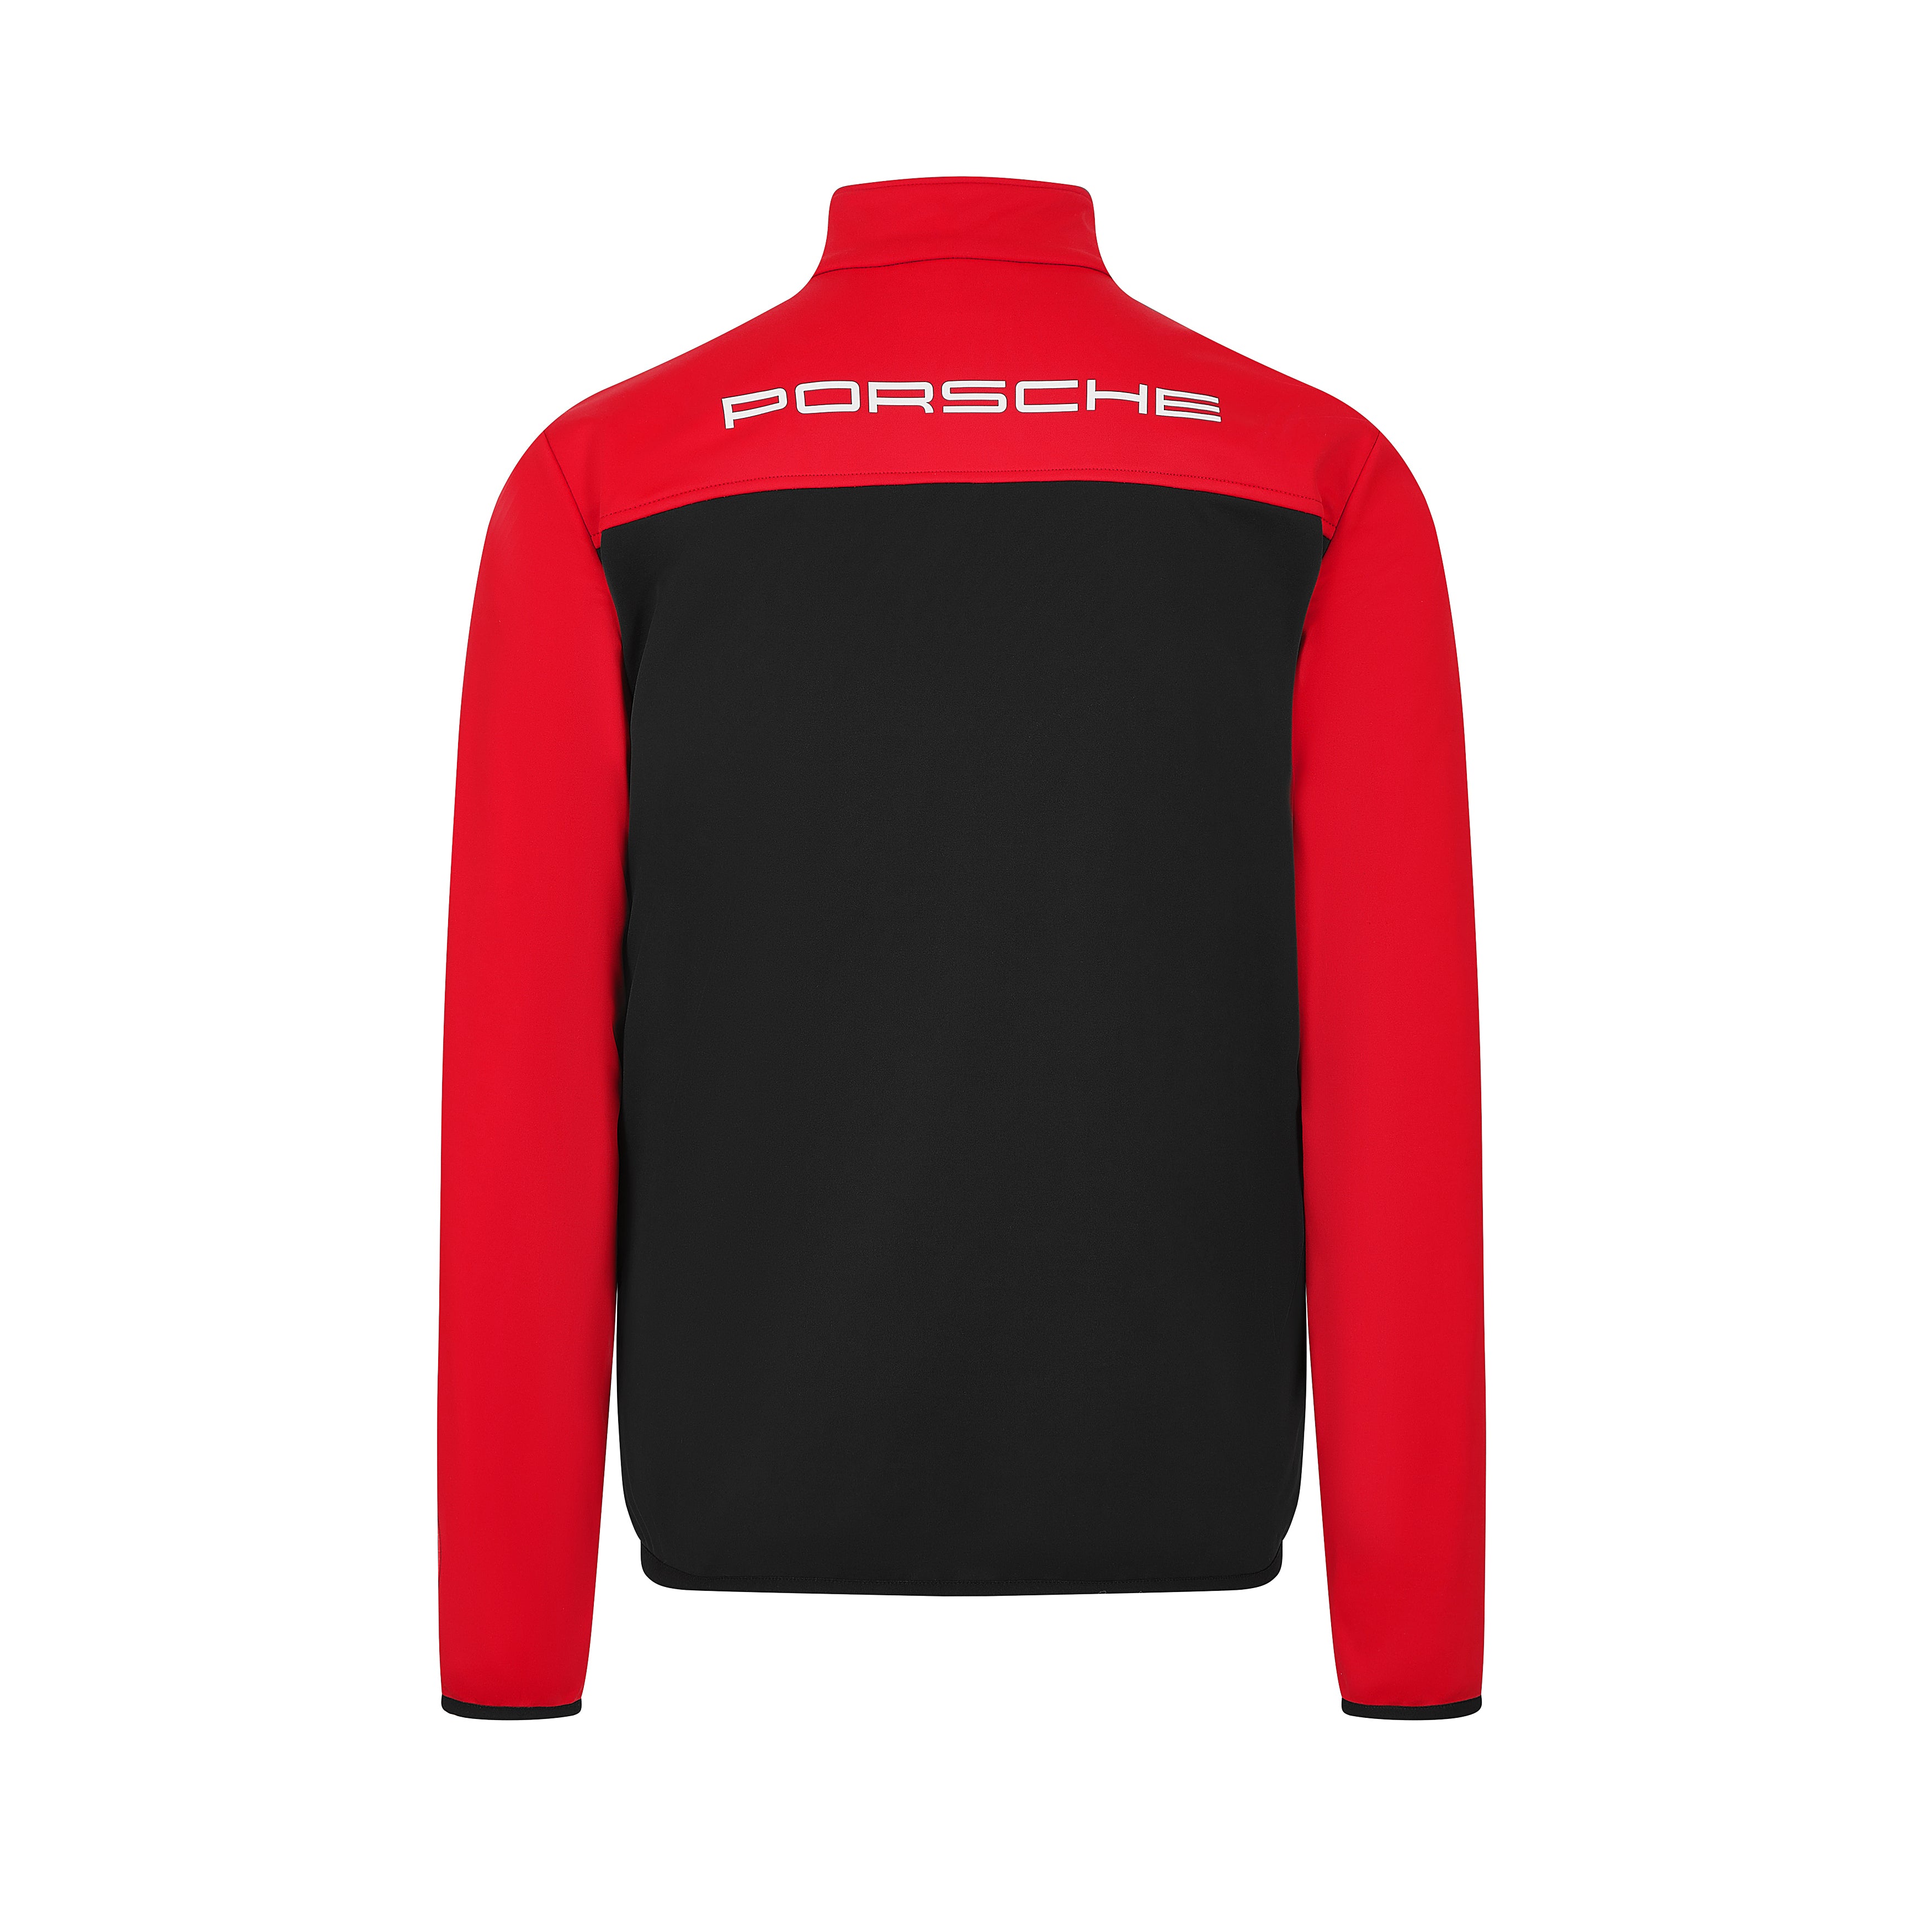 Porsche Motorsport Men's Fanwear Softshell Jacket Black/Red